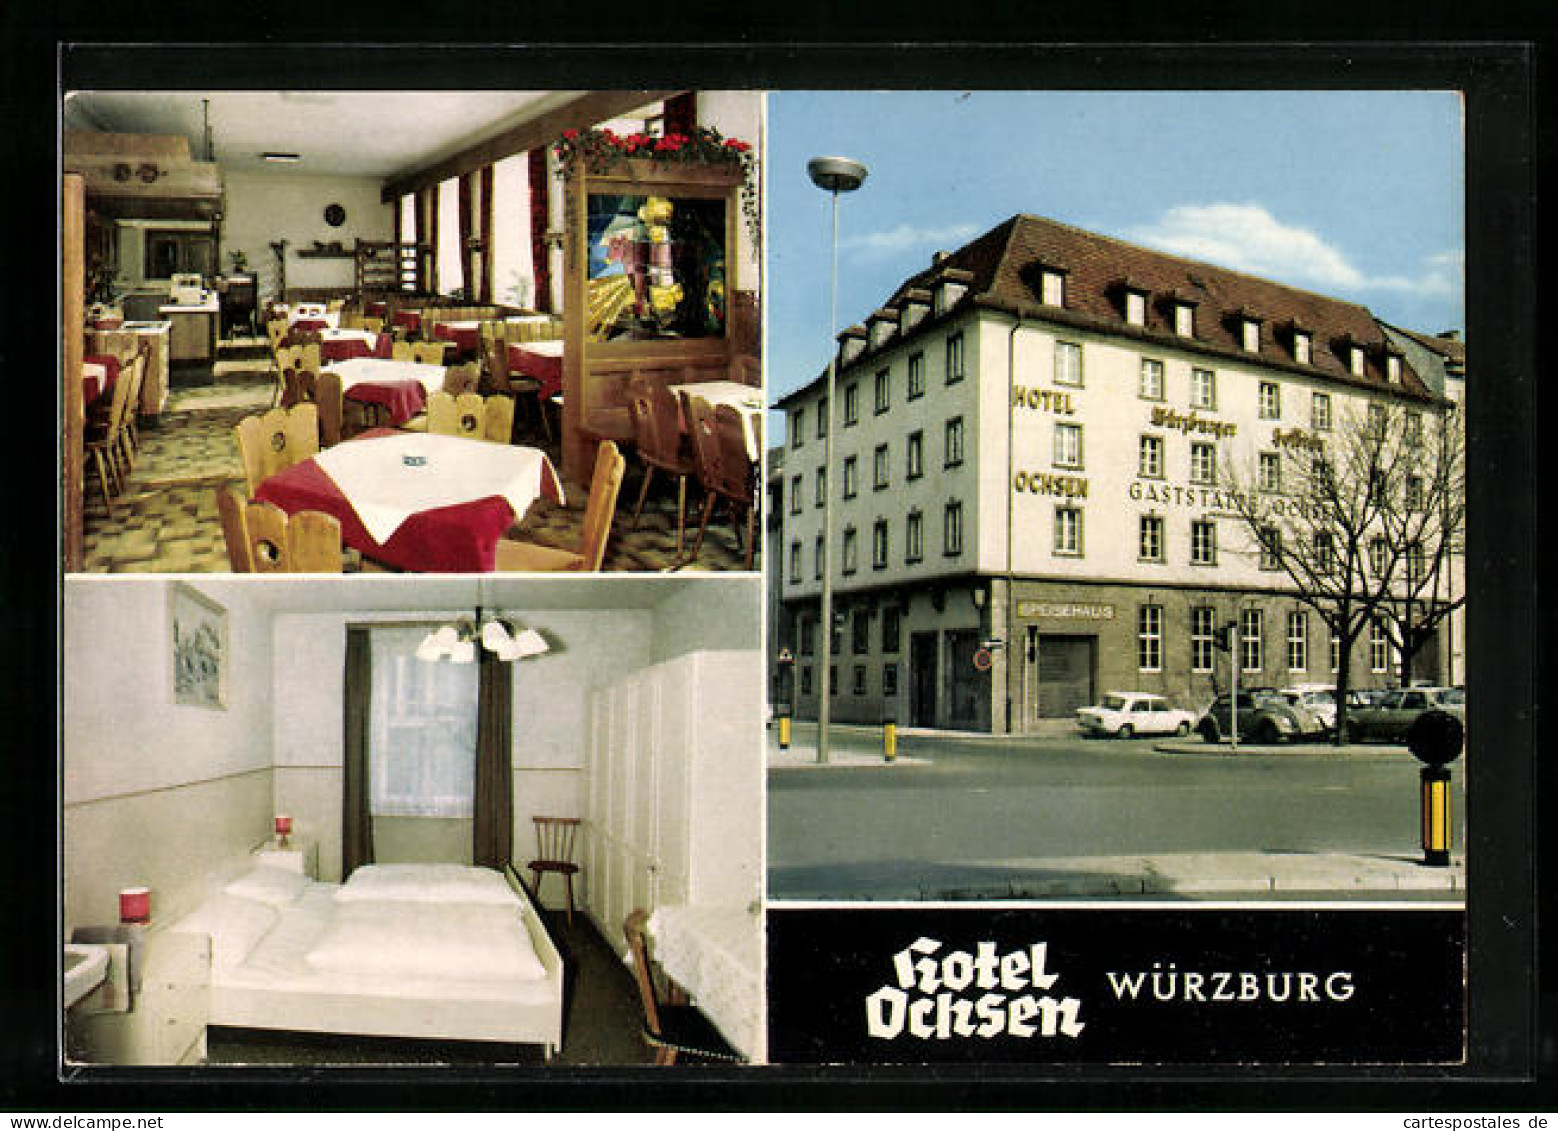 AK Würzburg, Hotel Ochsen, Inh. Walter Mayer, Juliuspromenade 1-3  - Wuerzburg